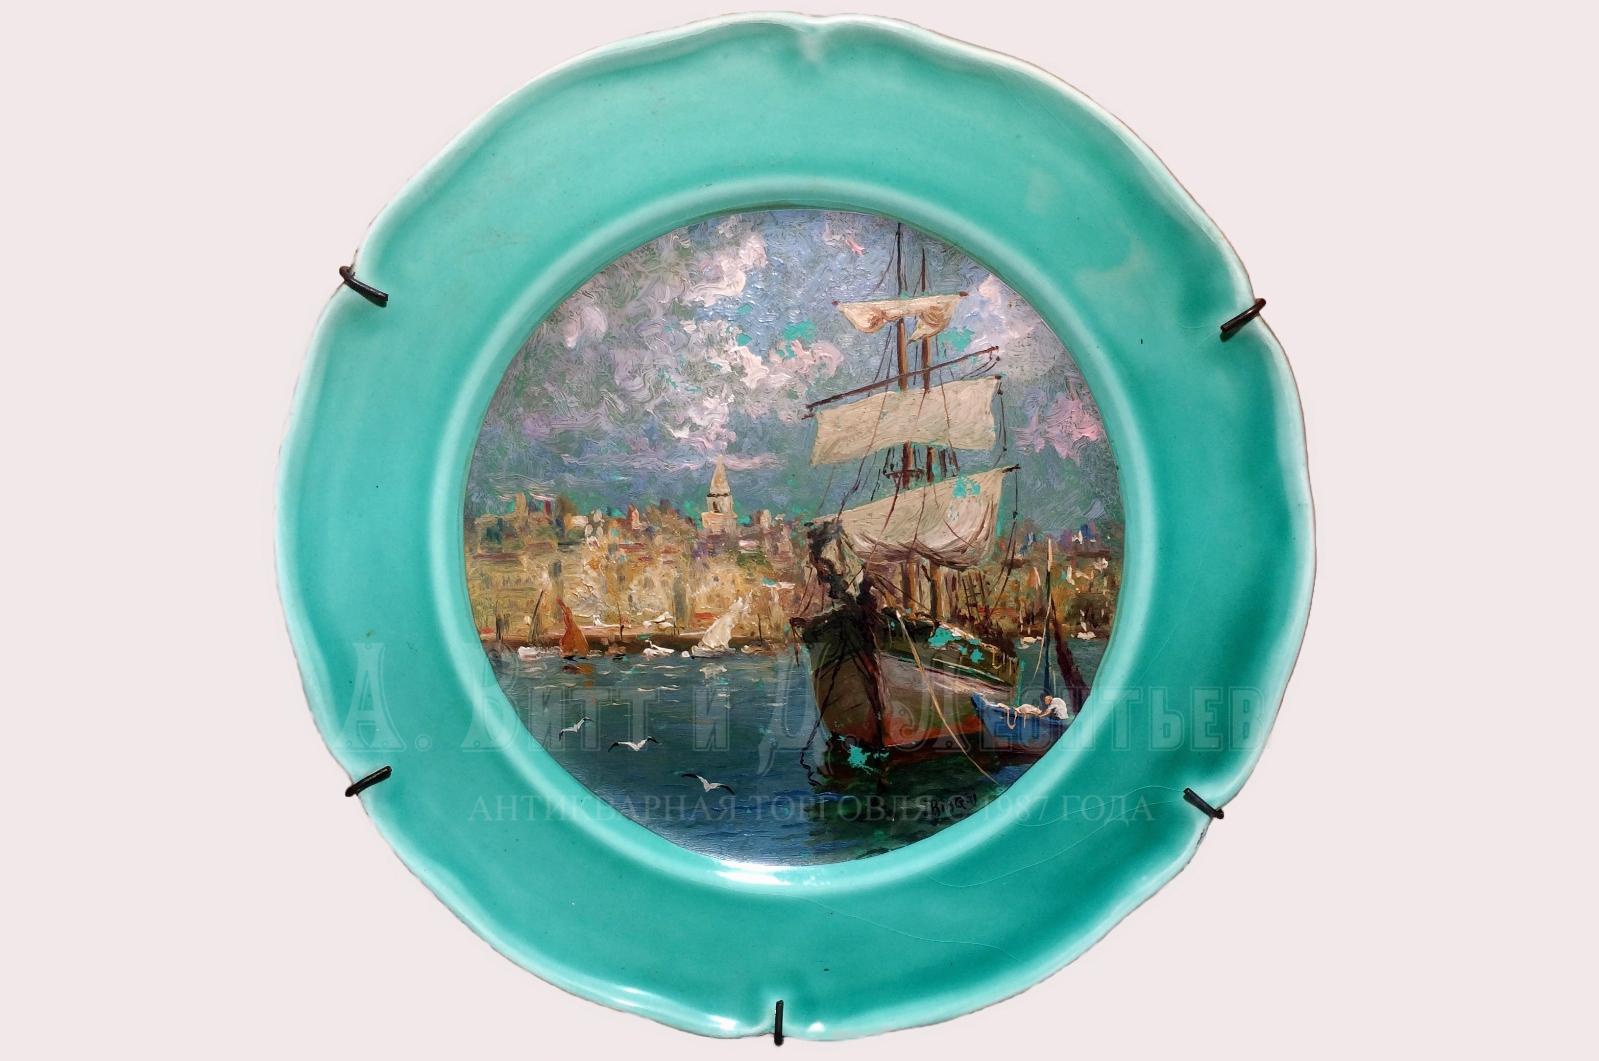 Антикварная тарелка с морским пейзажем